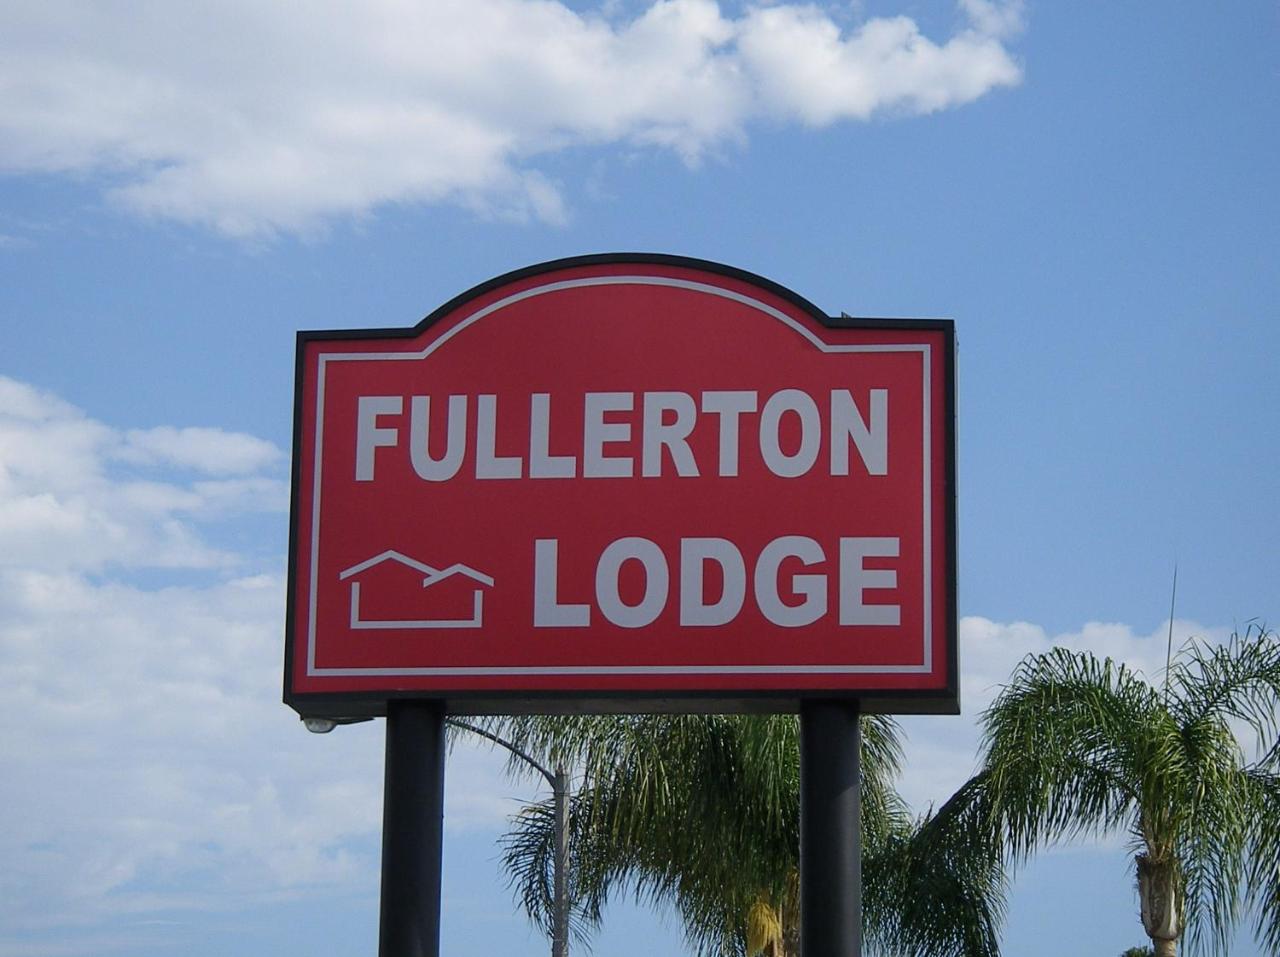 Fullerton Lodge